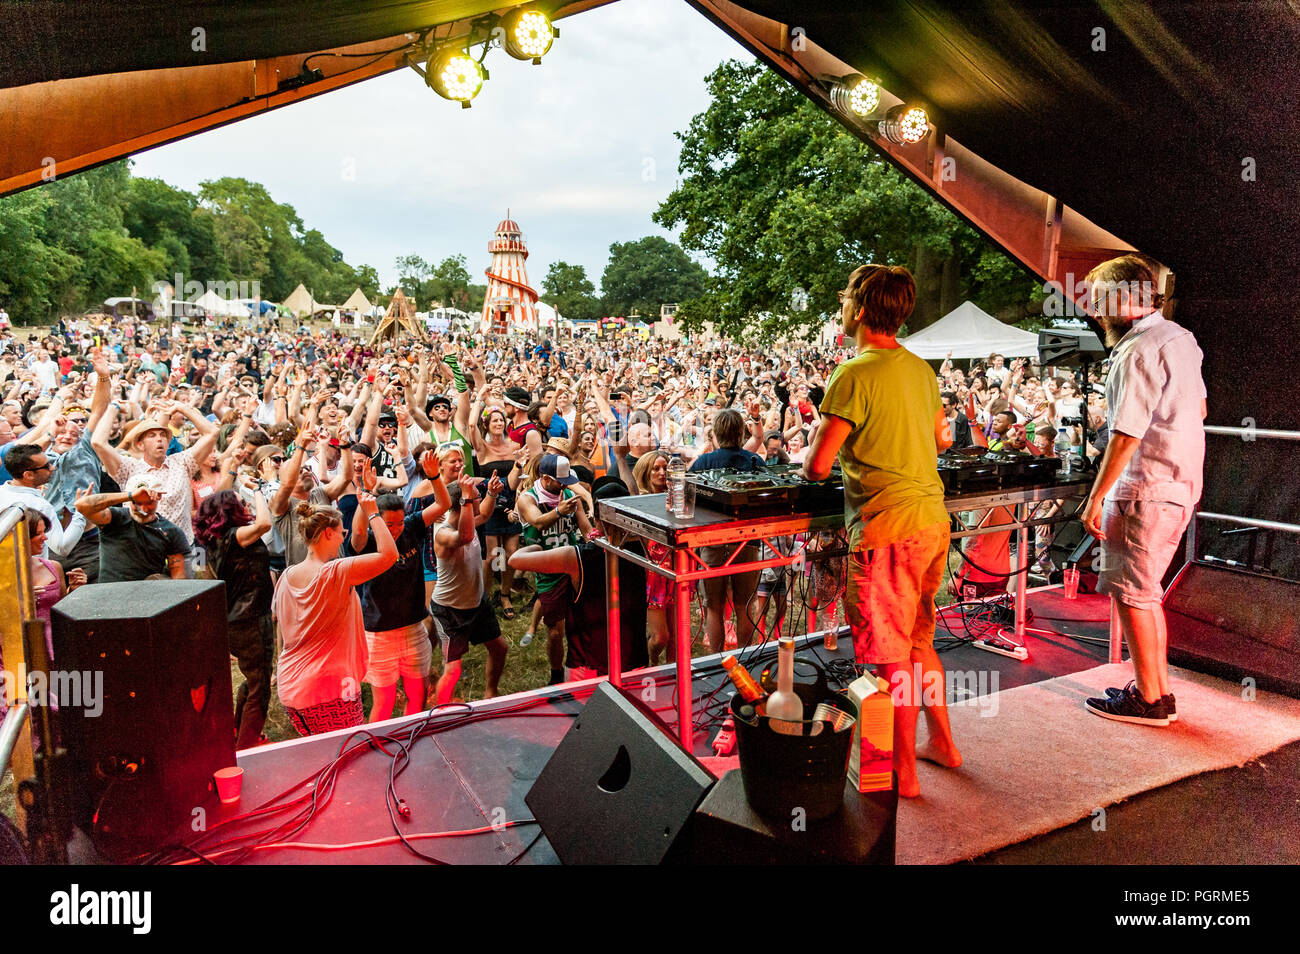 Basement Jaxx entertaining a large crowd at Lunar festival Solihull England Stock Photo